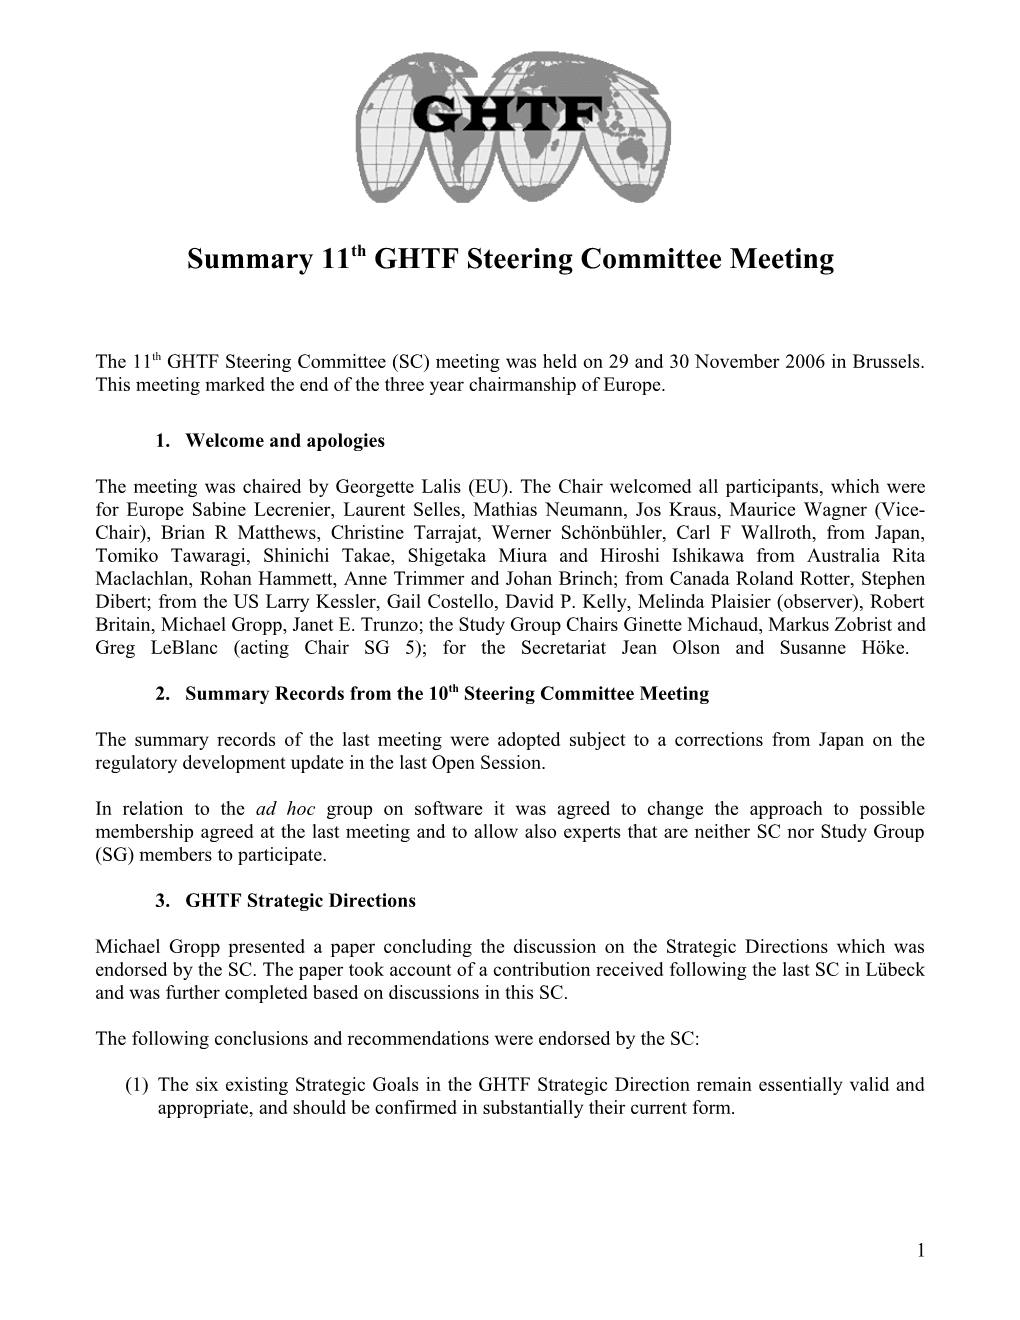 GHTF SC Meeting Minutes - November 2006